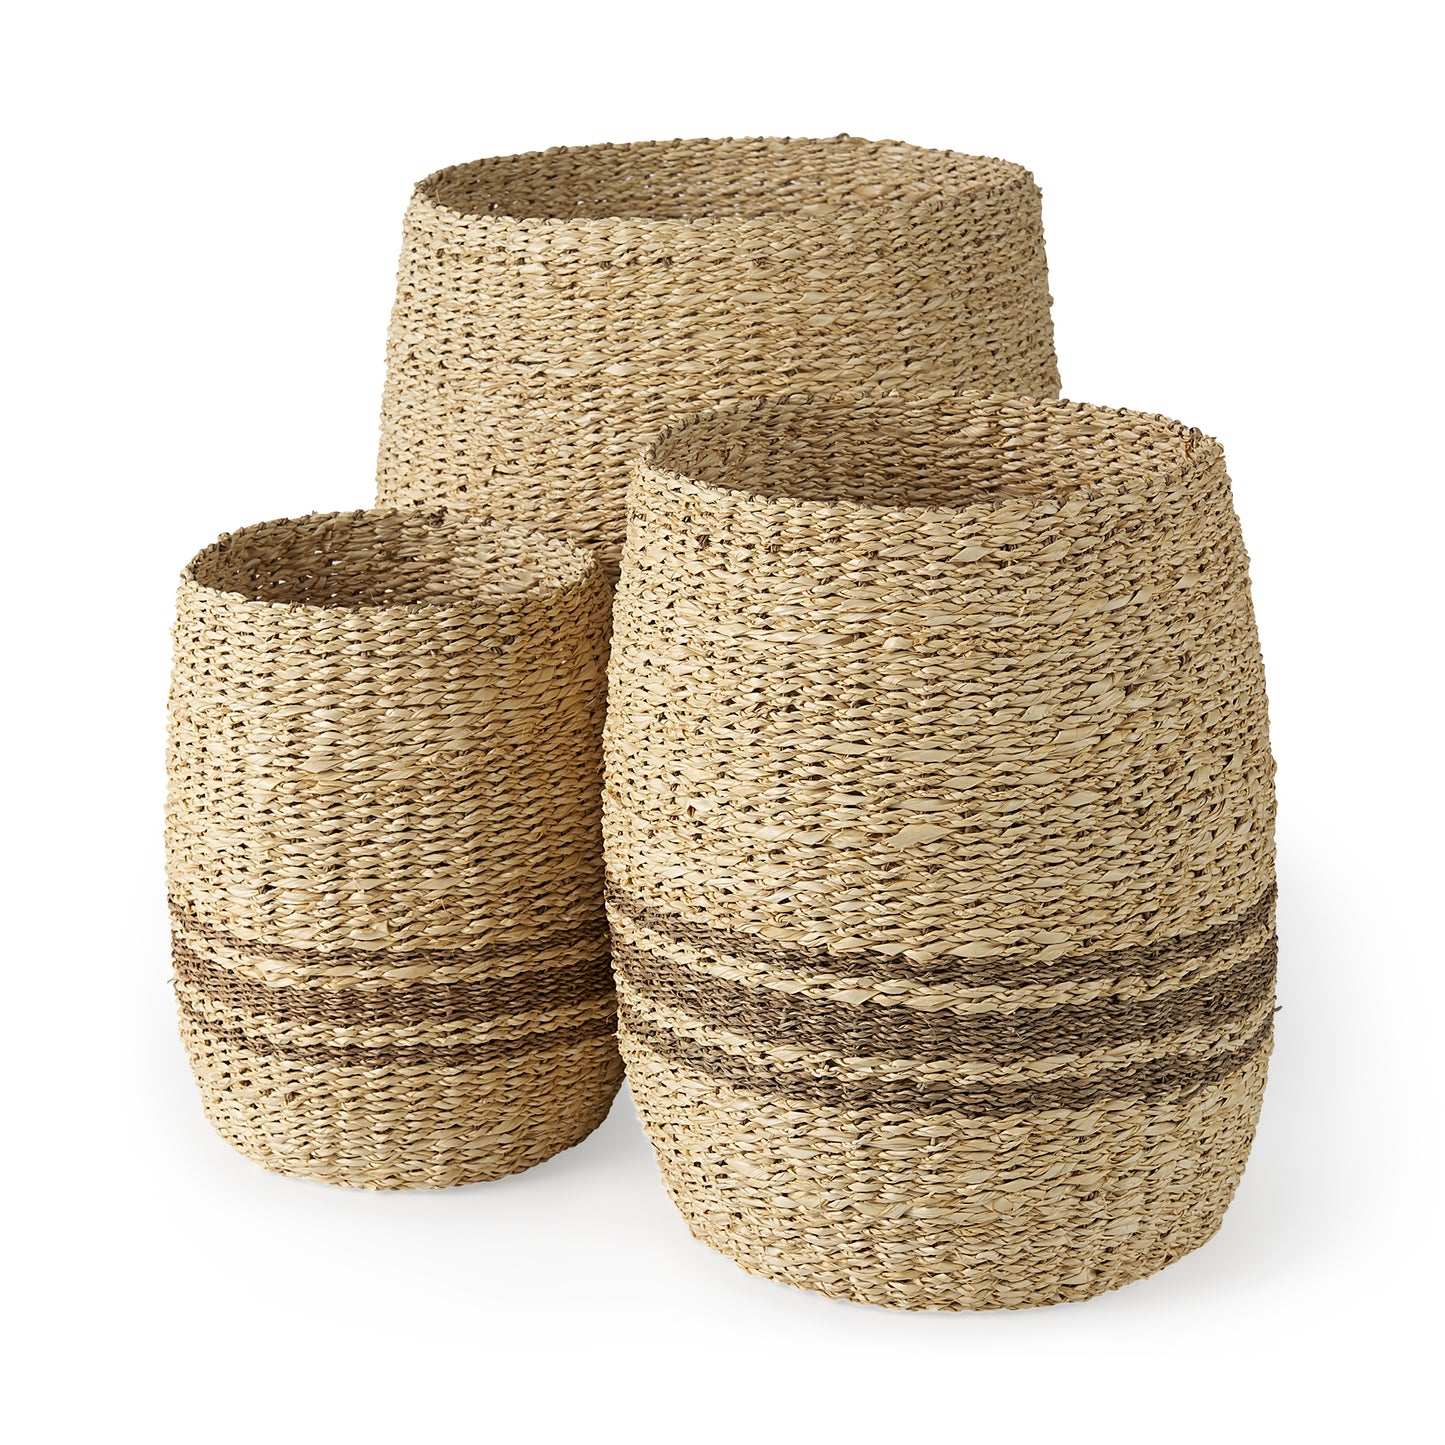 Sivannah Light Brown and Medium Brown Striped Seagrass Round Basket - Medium